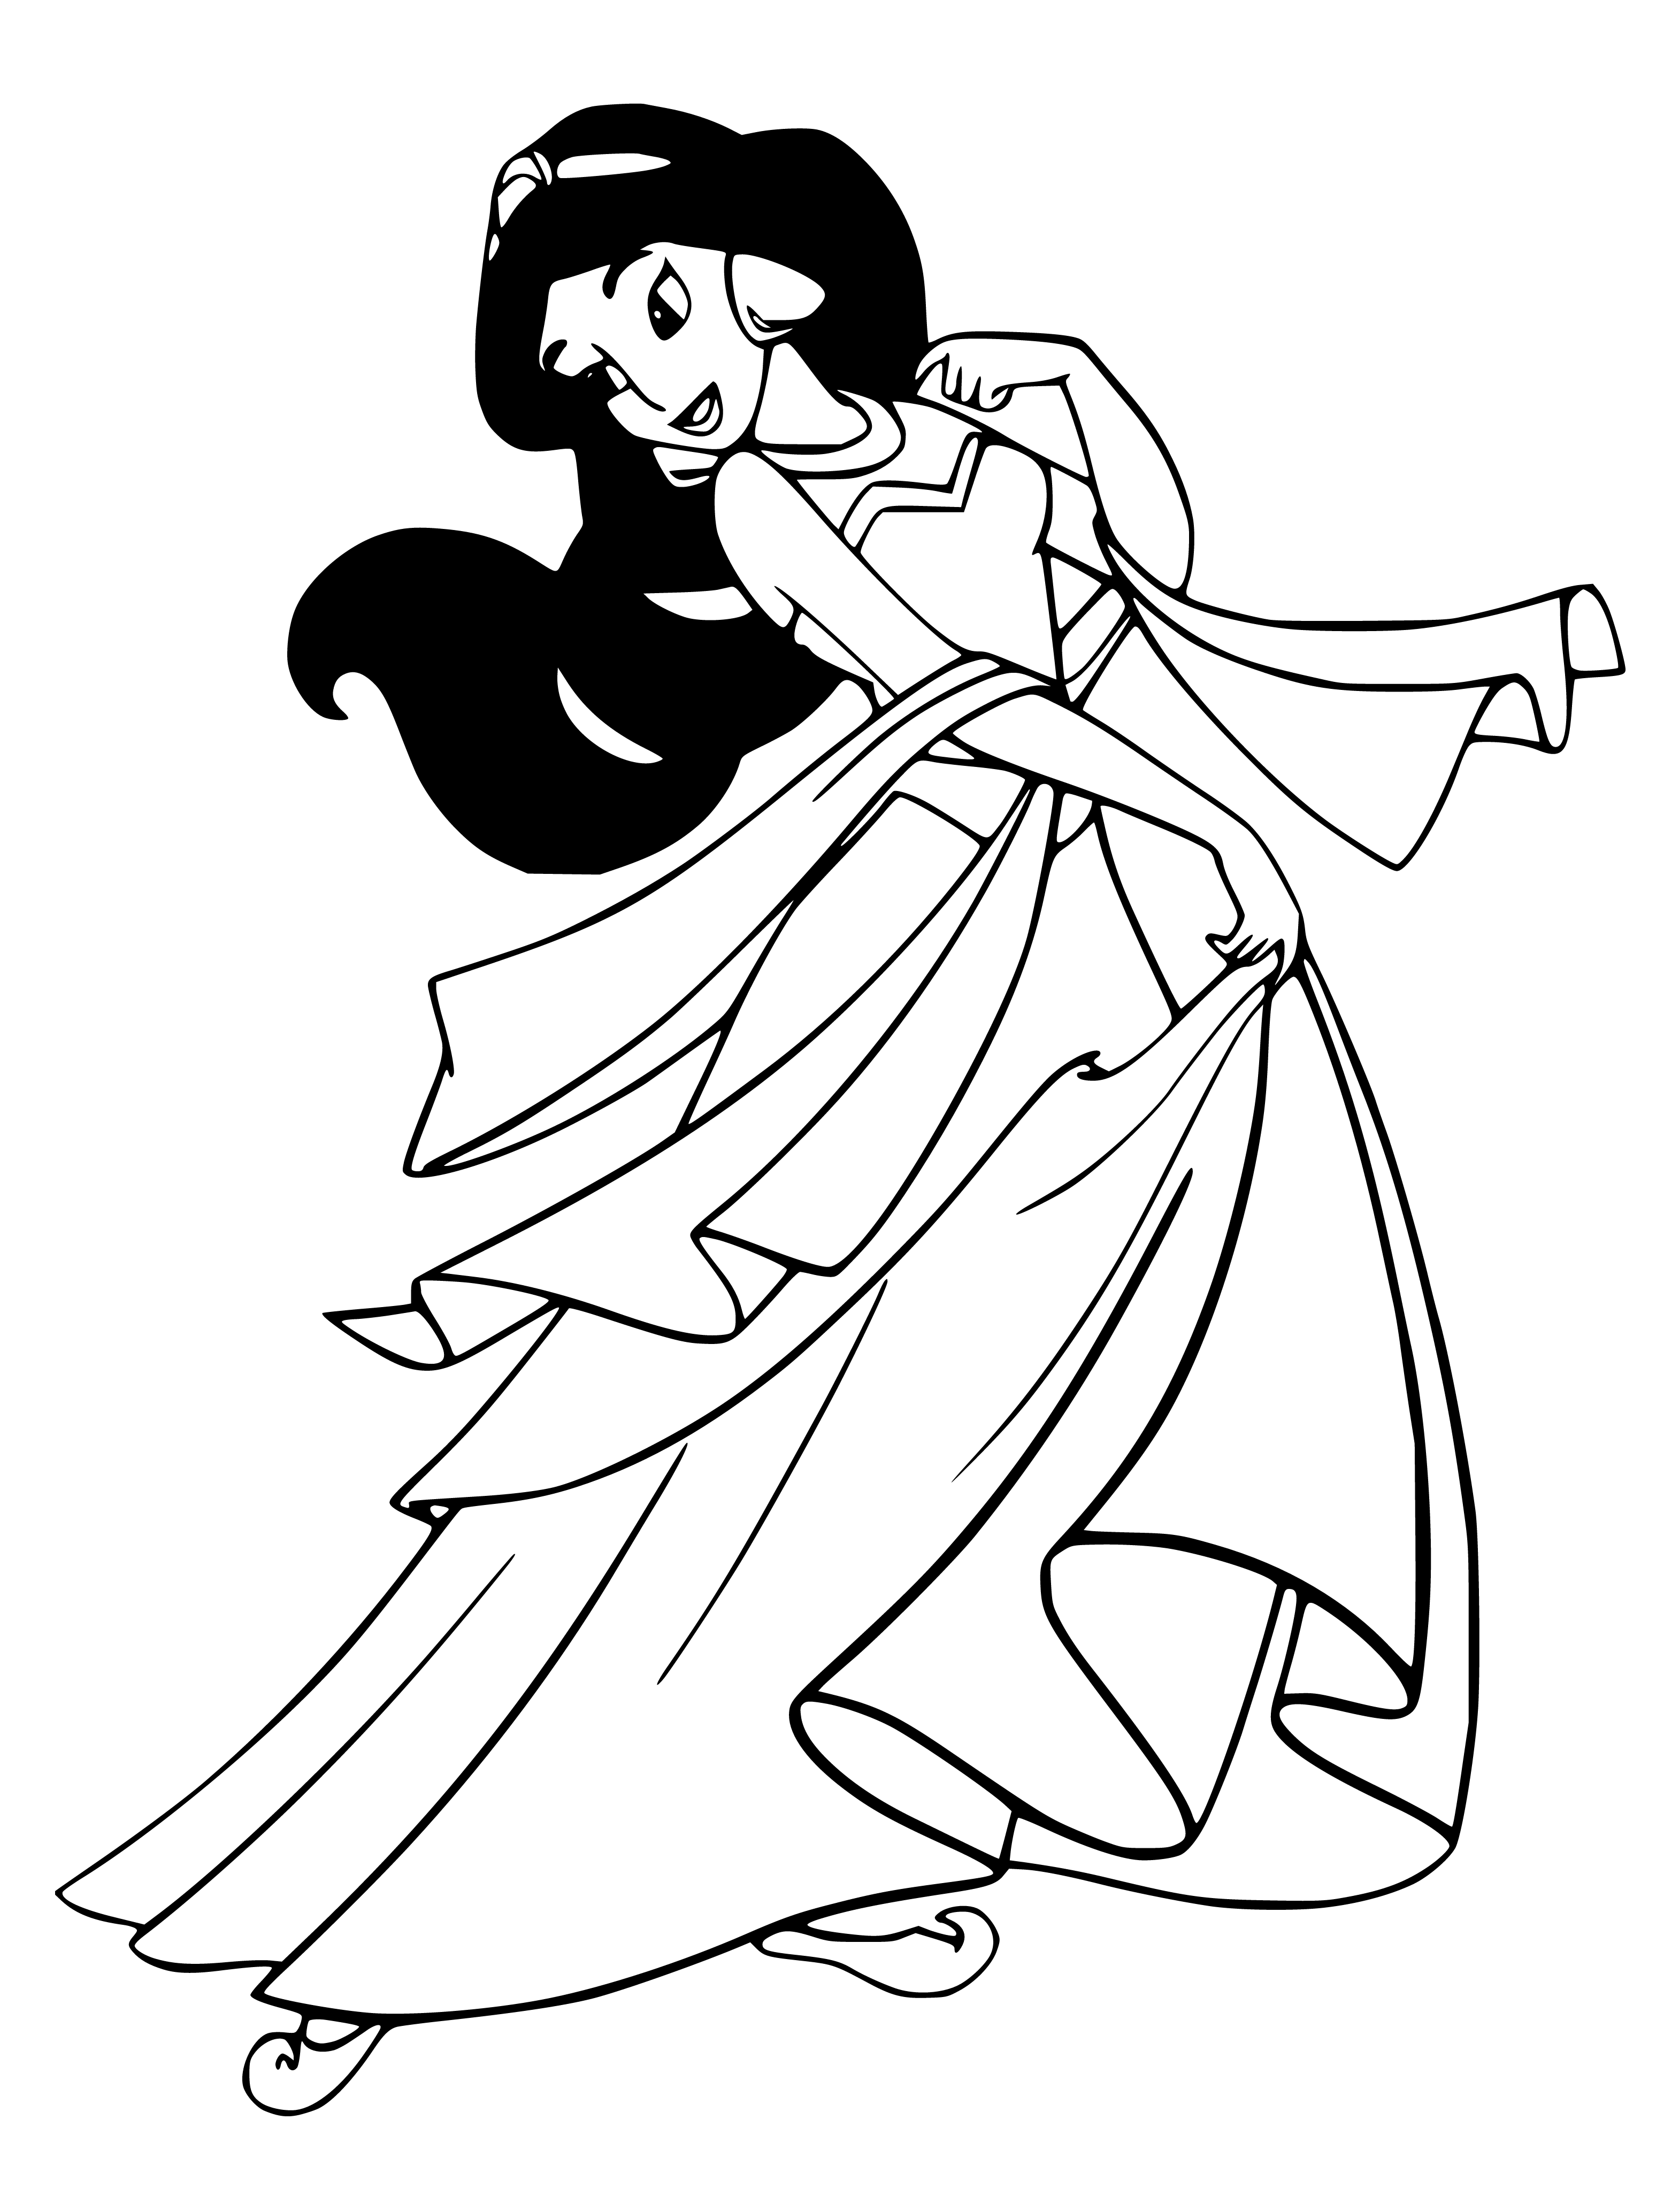 Printable Princes Jasmine beautiful blank image to Color Coloring Page for kids.